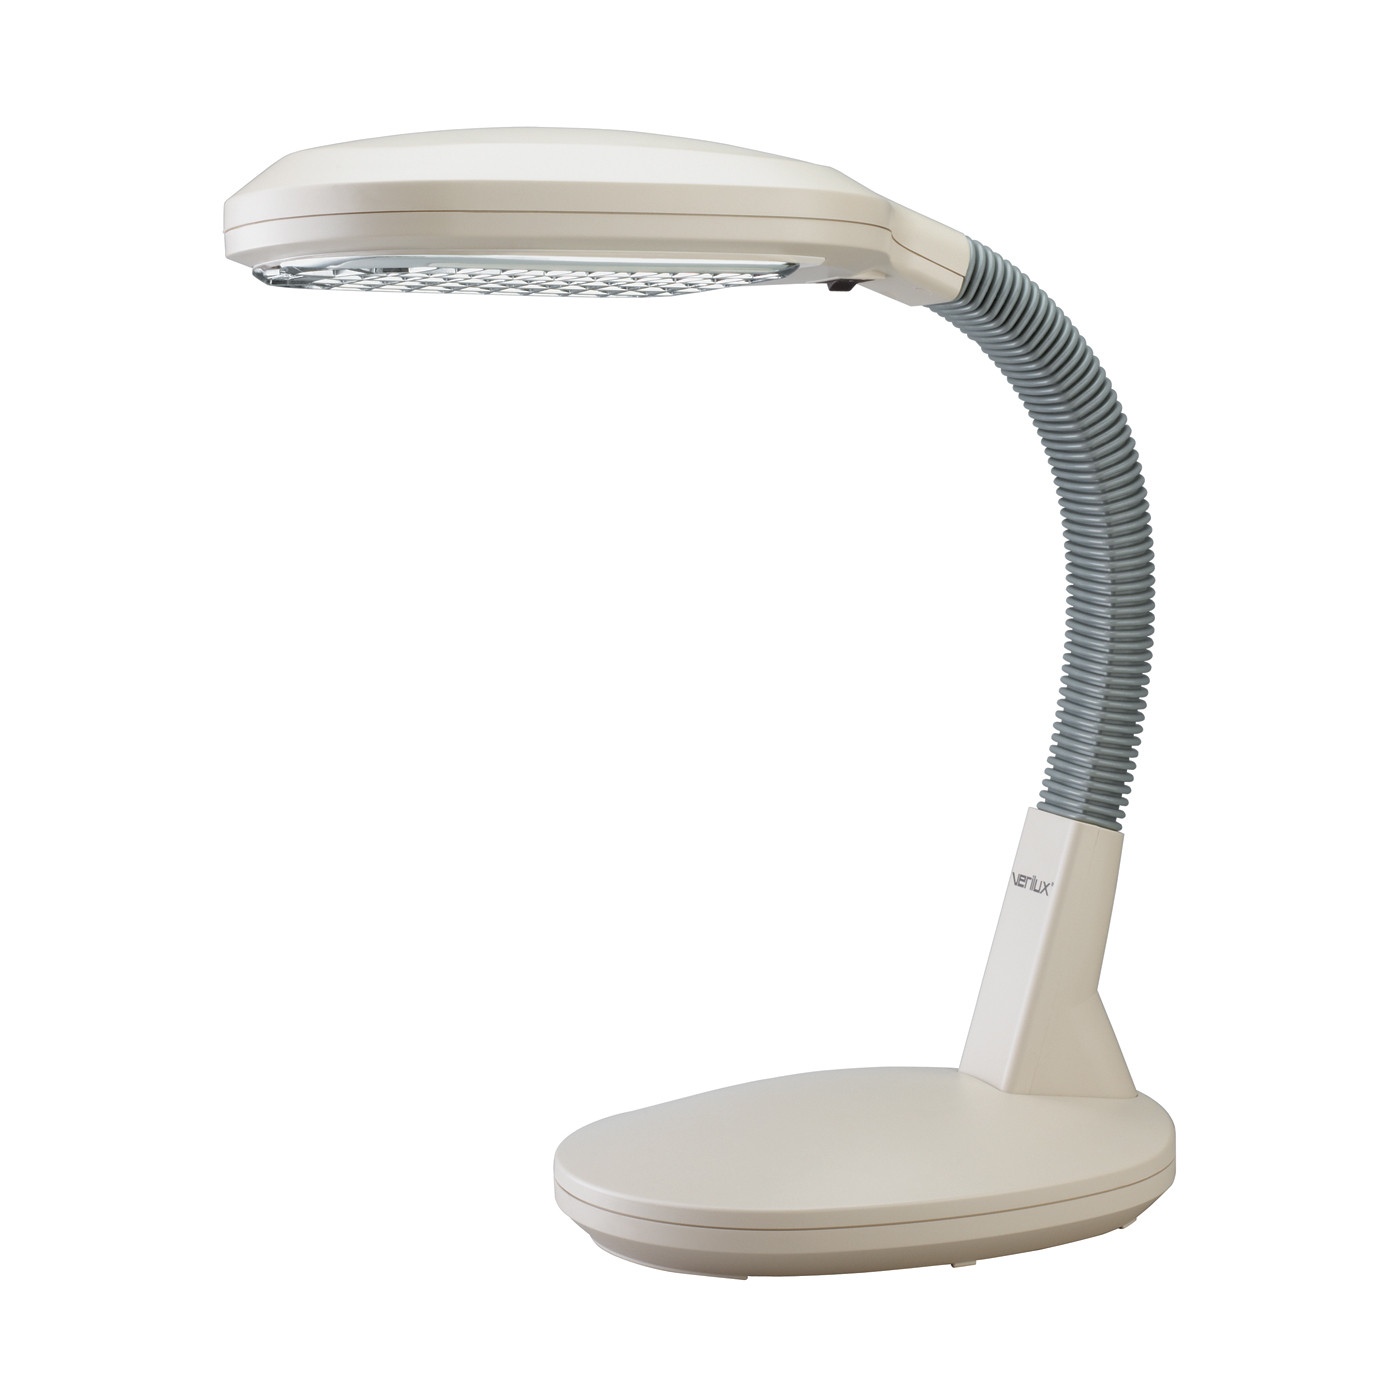 Best ideas about Verilux Desk Lamp
. Save or Pin Verilux VD01 Original Natural Spectrum Deluxe Desk Lamp Now.